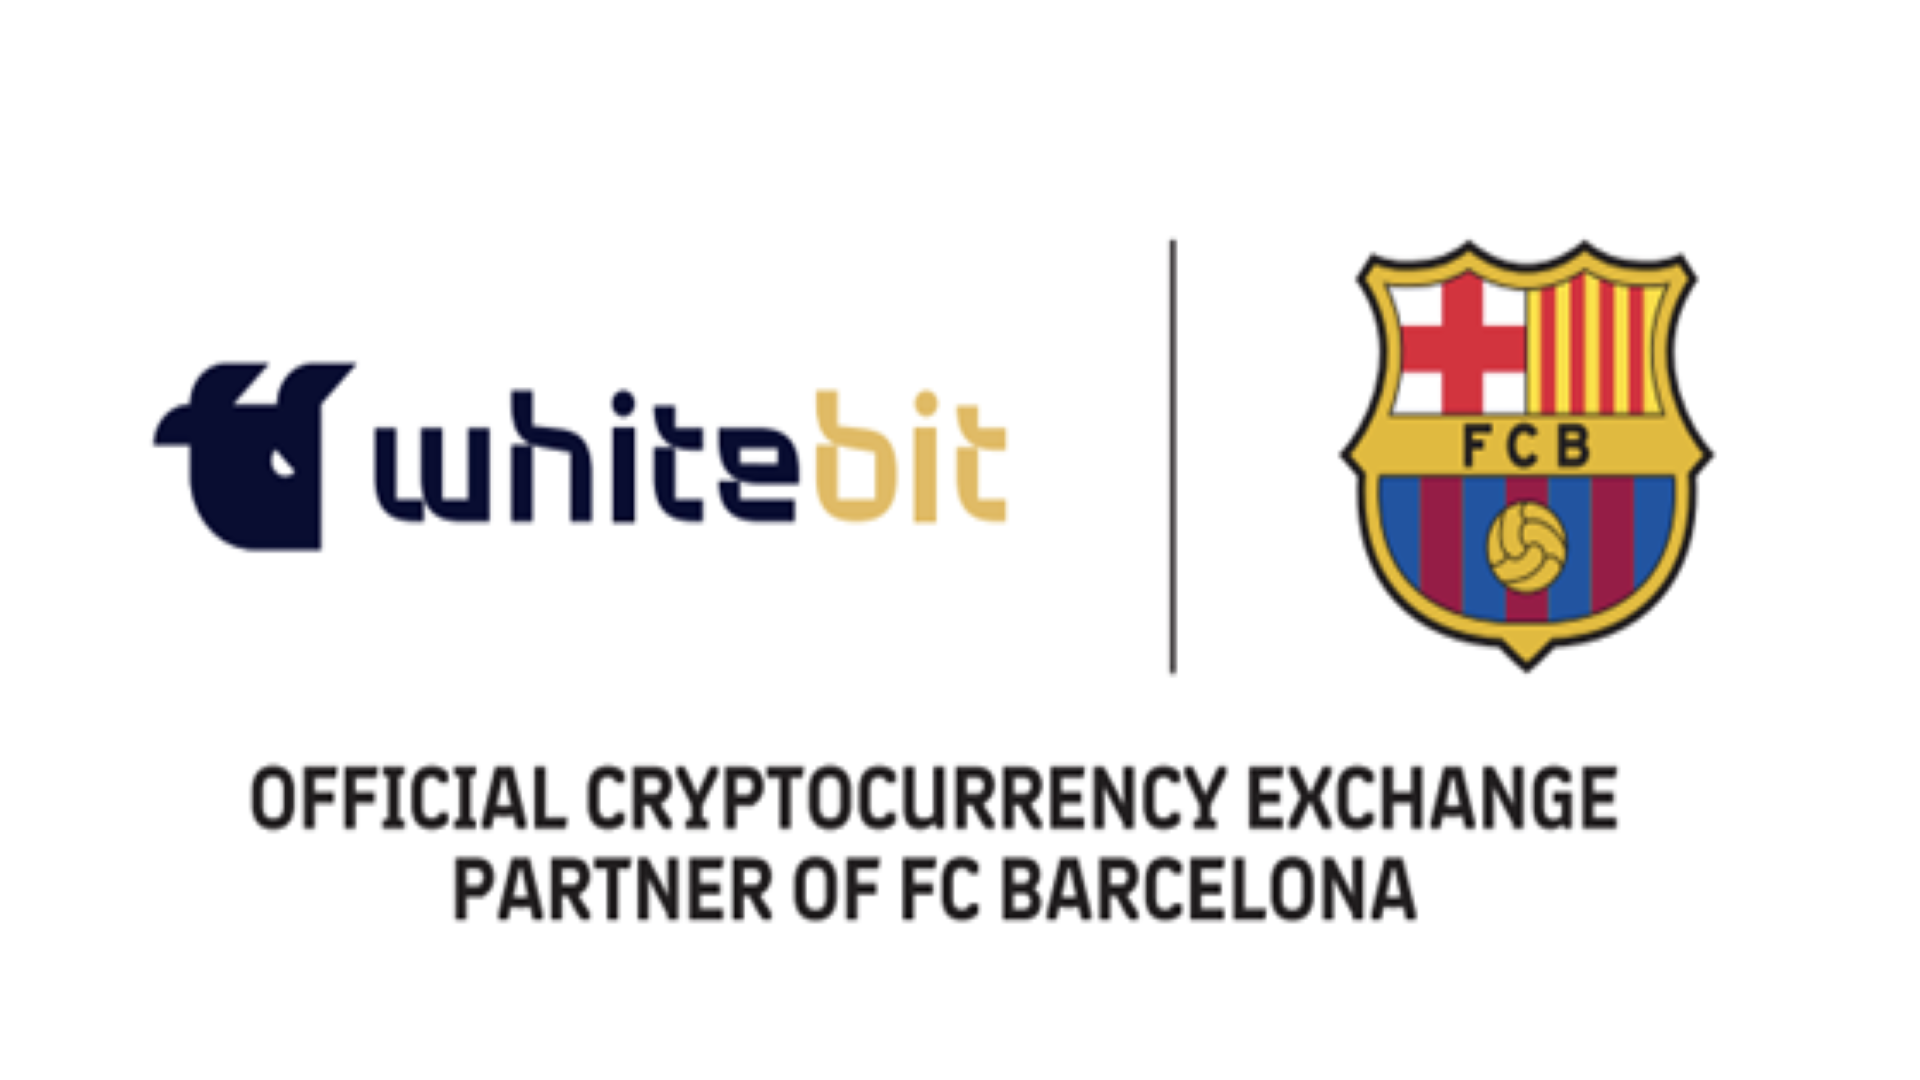 The WhiteBIT cryptocurrency company, FC Barcelona new business partner